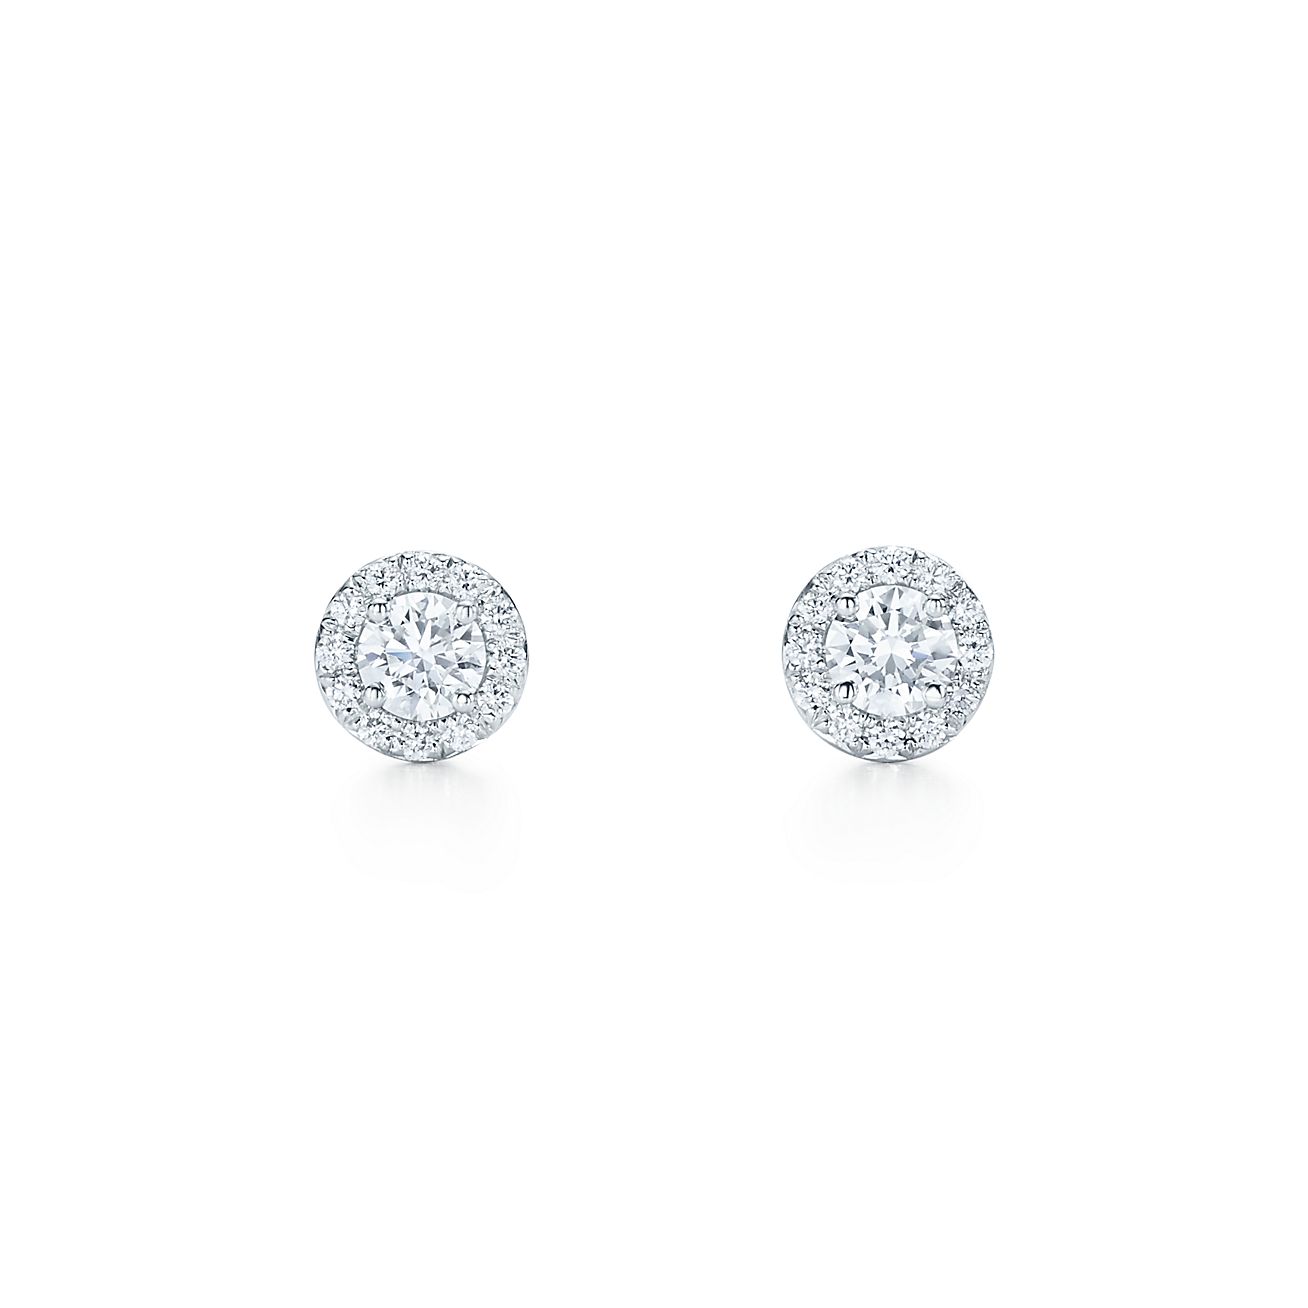 Tiffany Soleste® earrings in platinum 